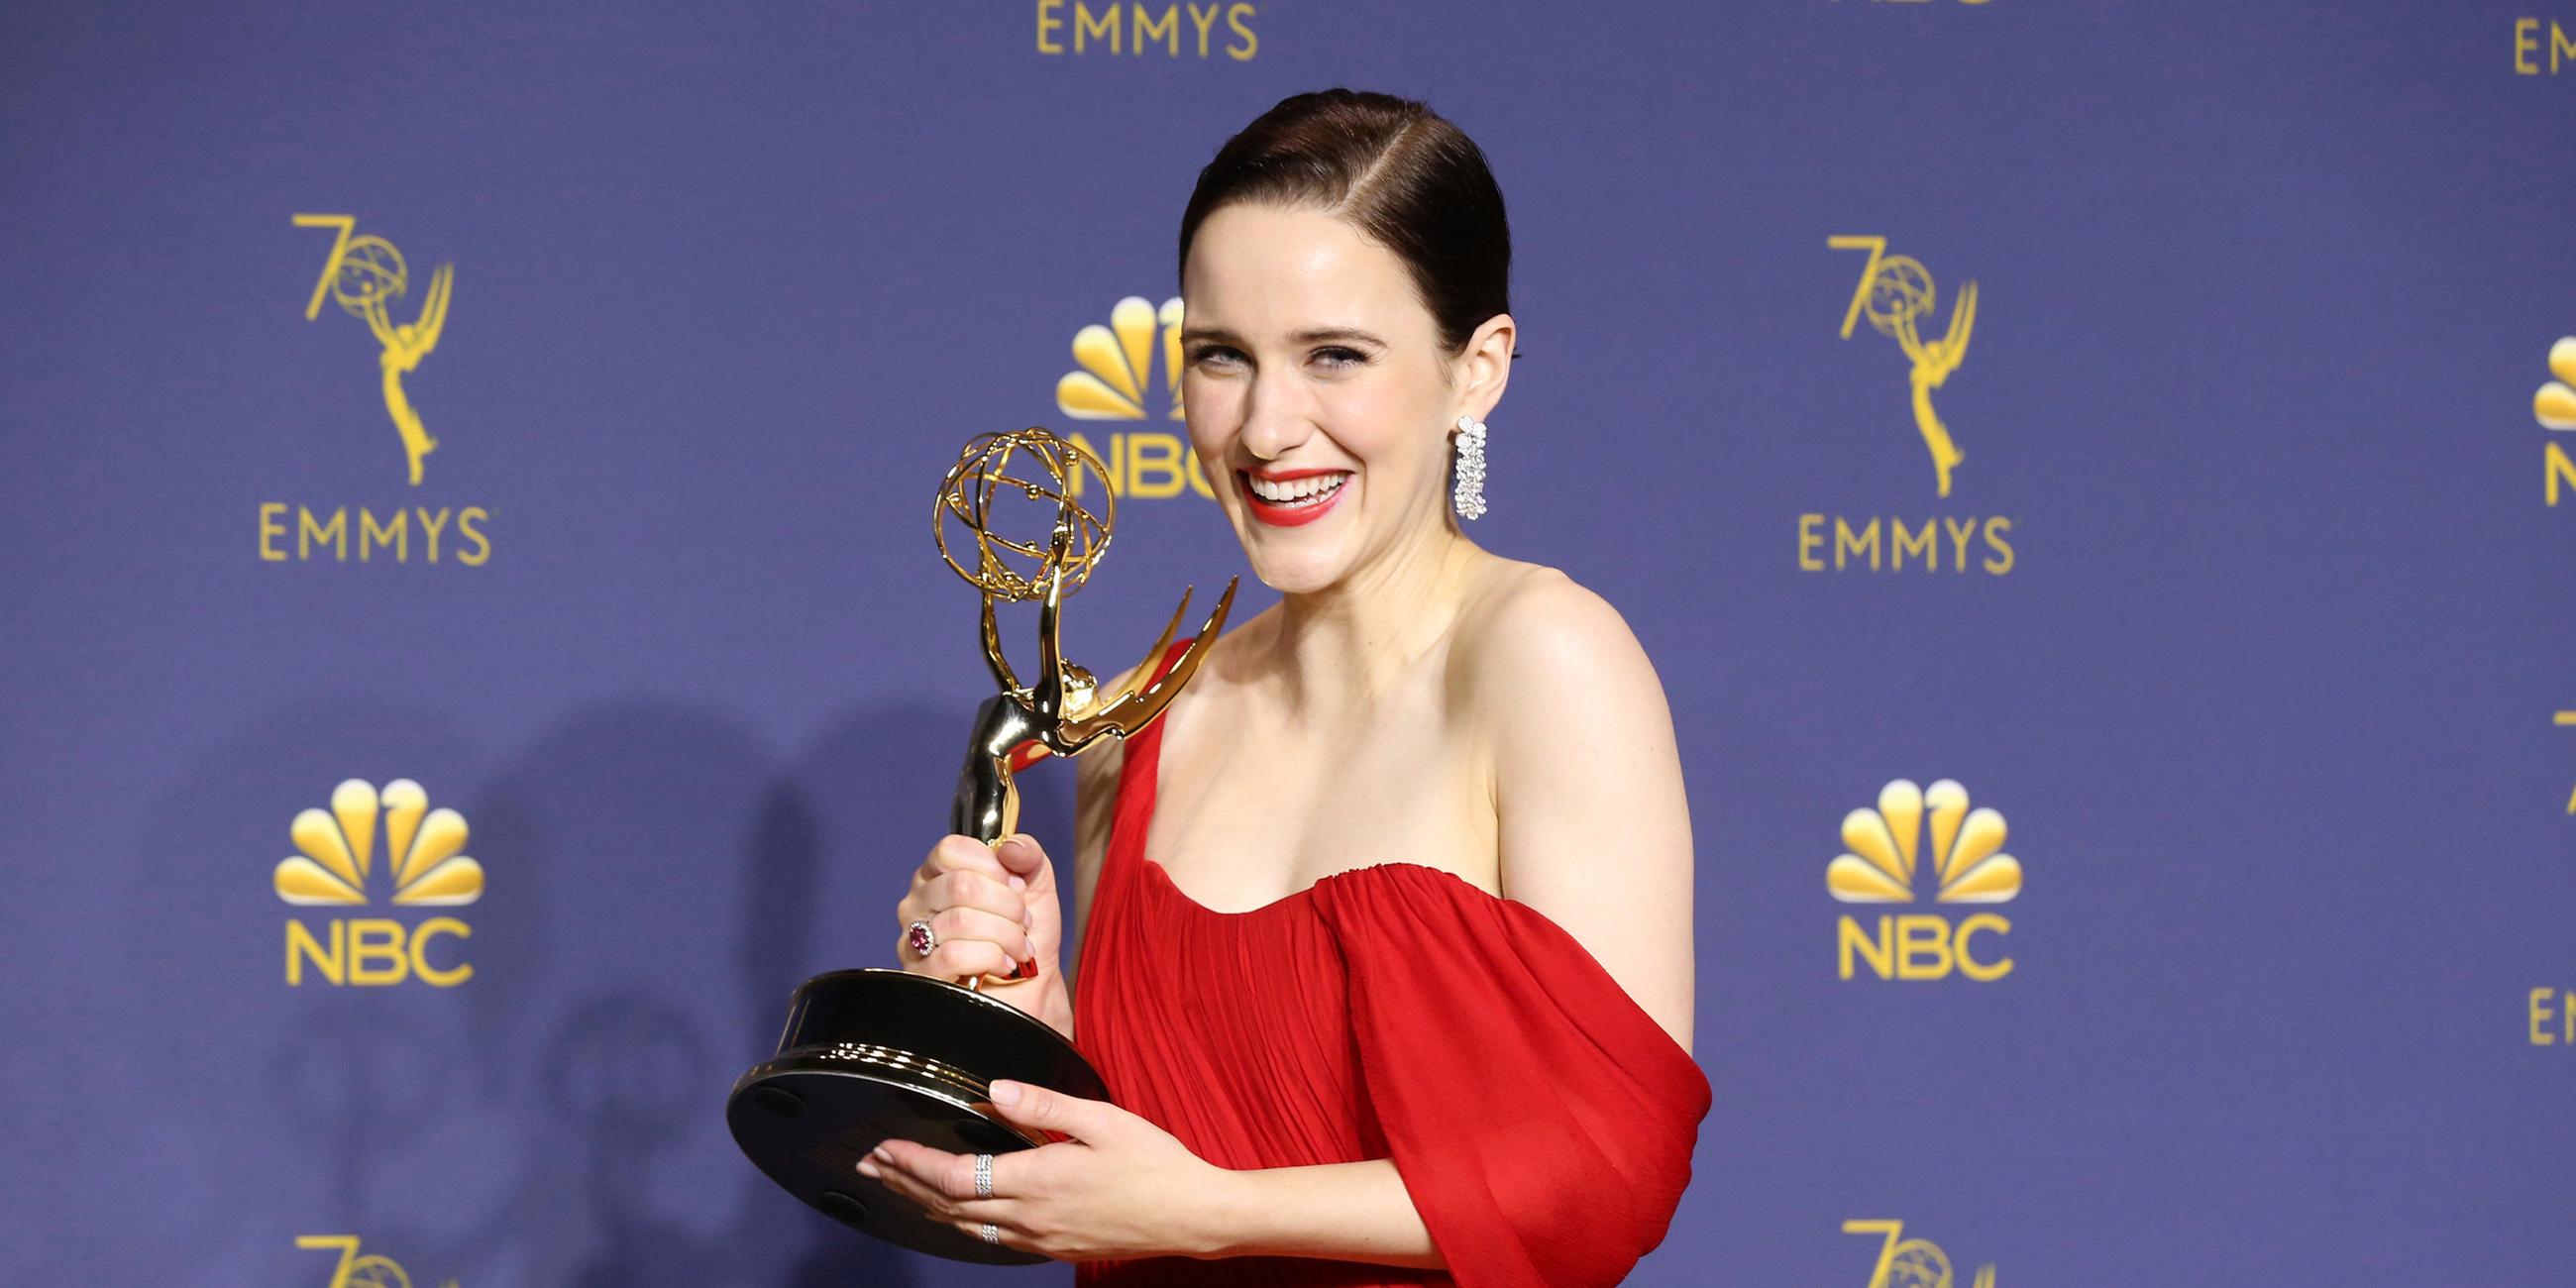 Emmy Awards: Beste Hauptdarstellerin in einer Comedyserie - Rachel Brosnahan für "The Marvelous Mrs. Maisel"